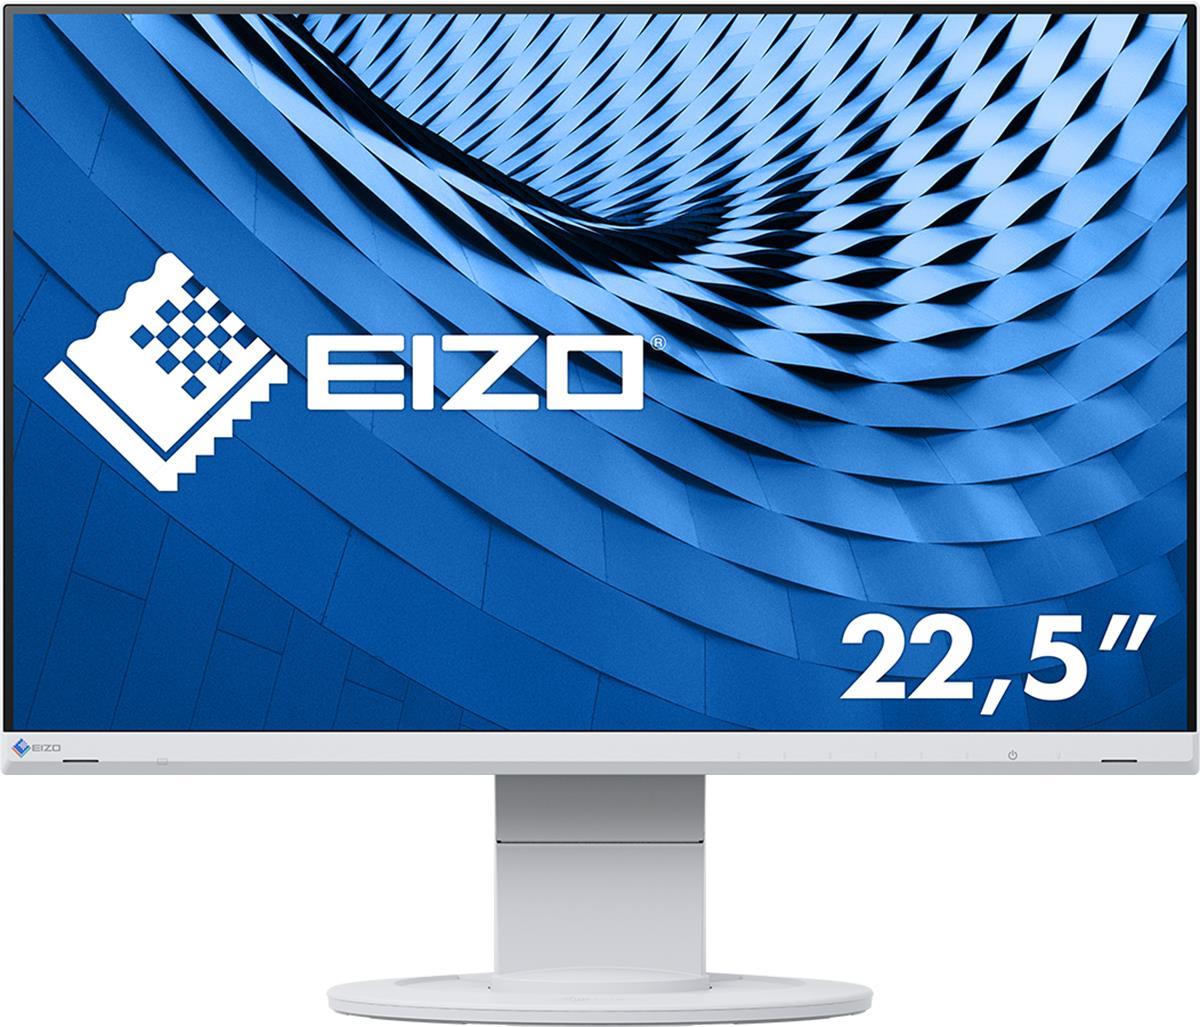 EIZO FlexScan EV2360-WT - LED-Monitor - 57.2 cm (22.5) (22.5 sichtbar) - 1920 x 1200 Full HD (1080p) - IPS - 1000:1 - 5 ms - DVI-D, VGA, DisplayPort - Lautsprecher - weiß von Eizo